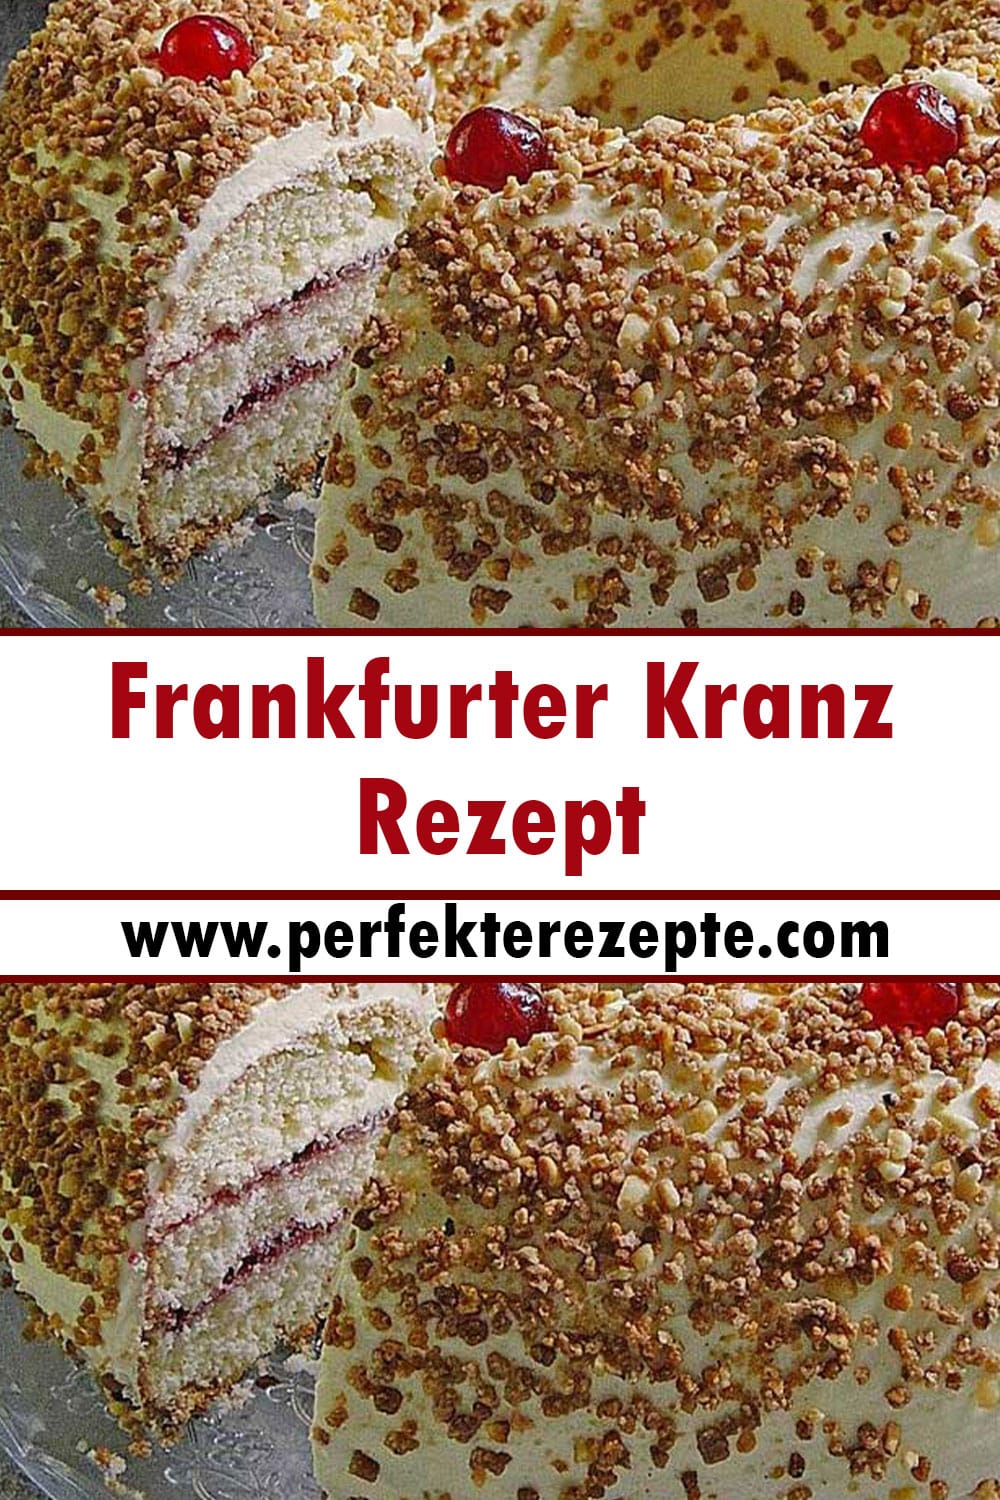 Frankfurter Kranz Rezept ein echter Klassiker